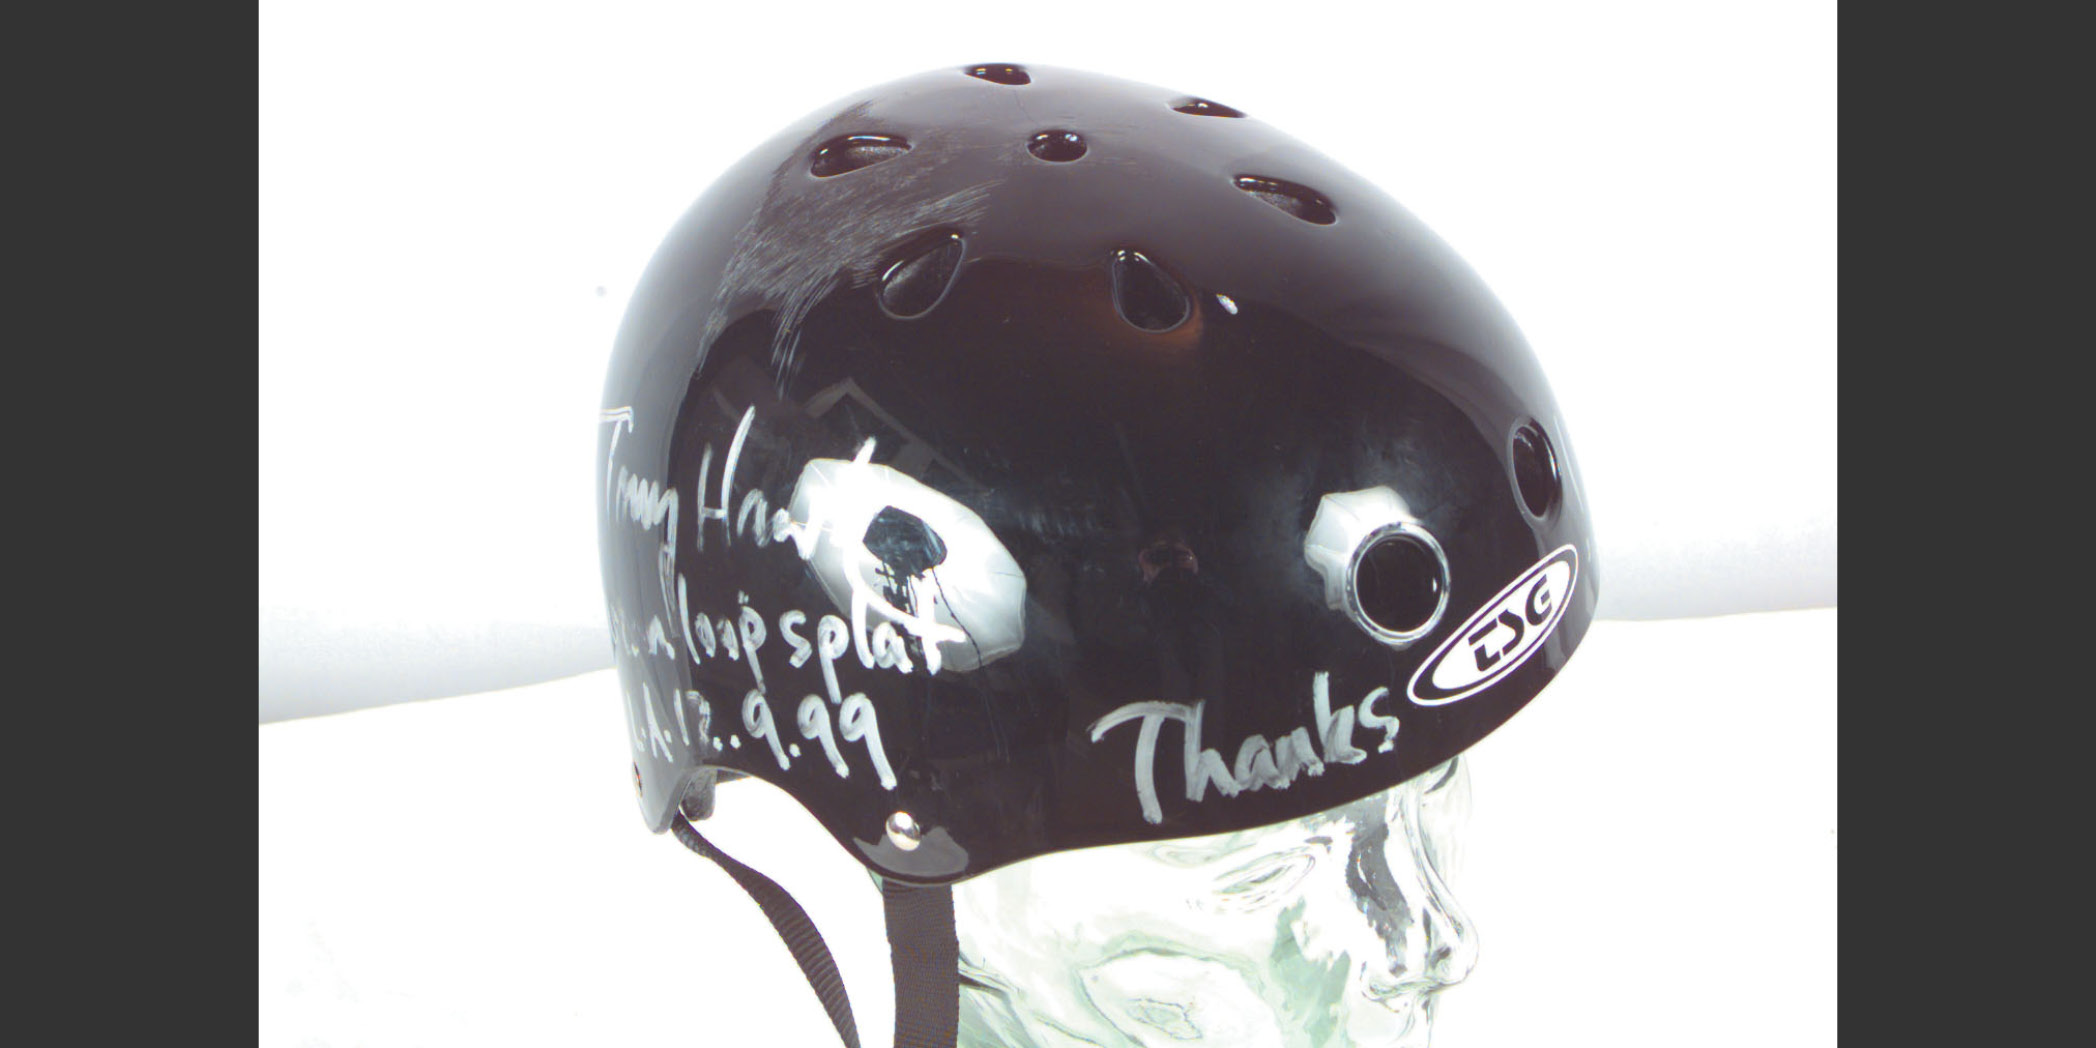 1999_tsg-history_tony-hawk-crash-helmet.jpg